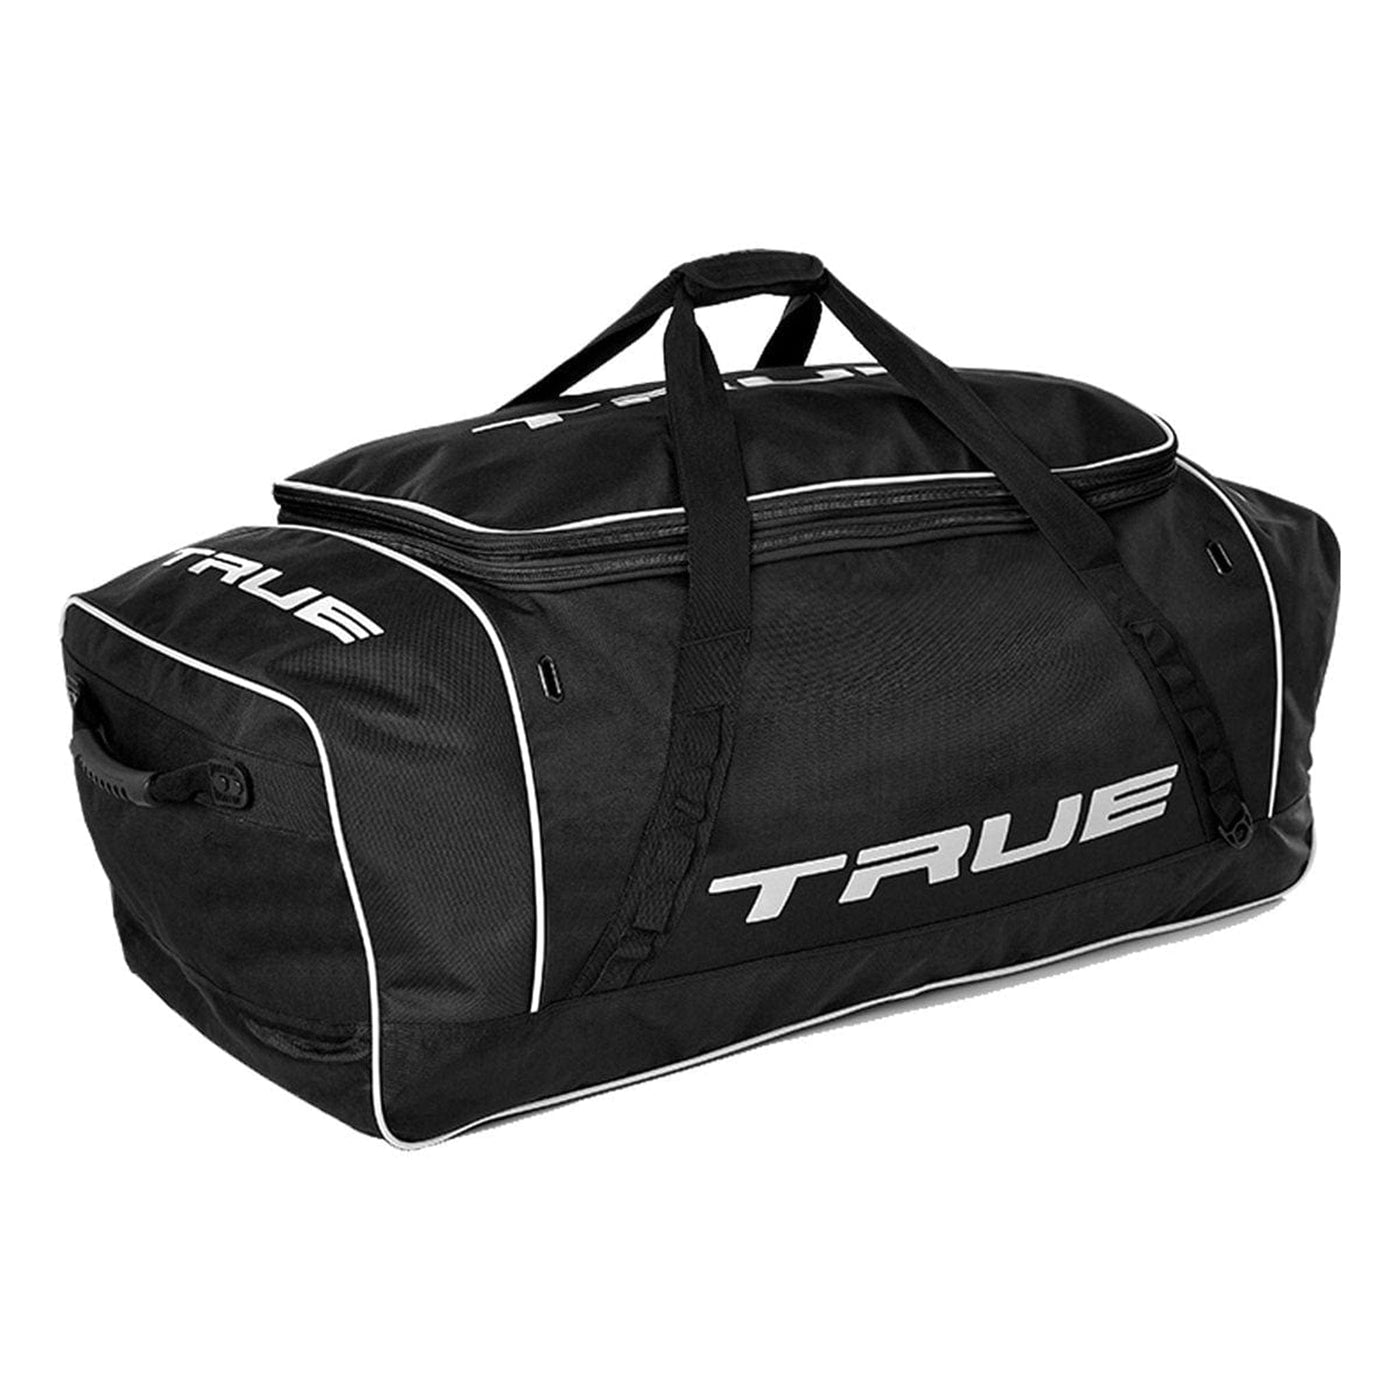 TRUE Core Senior Carry Hockey Bag - The Hockey Shop Source For Sports